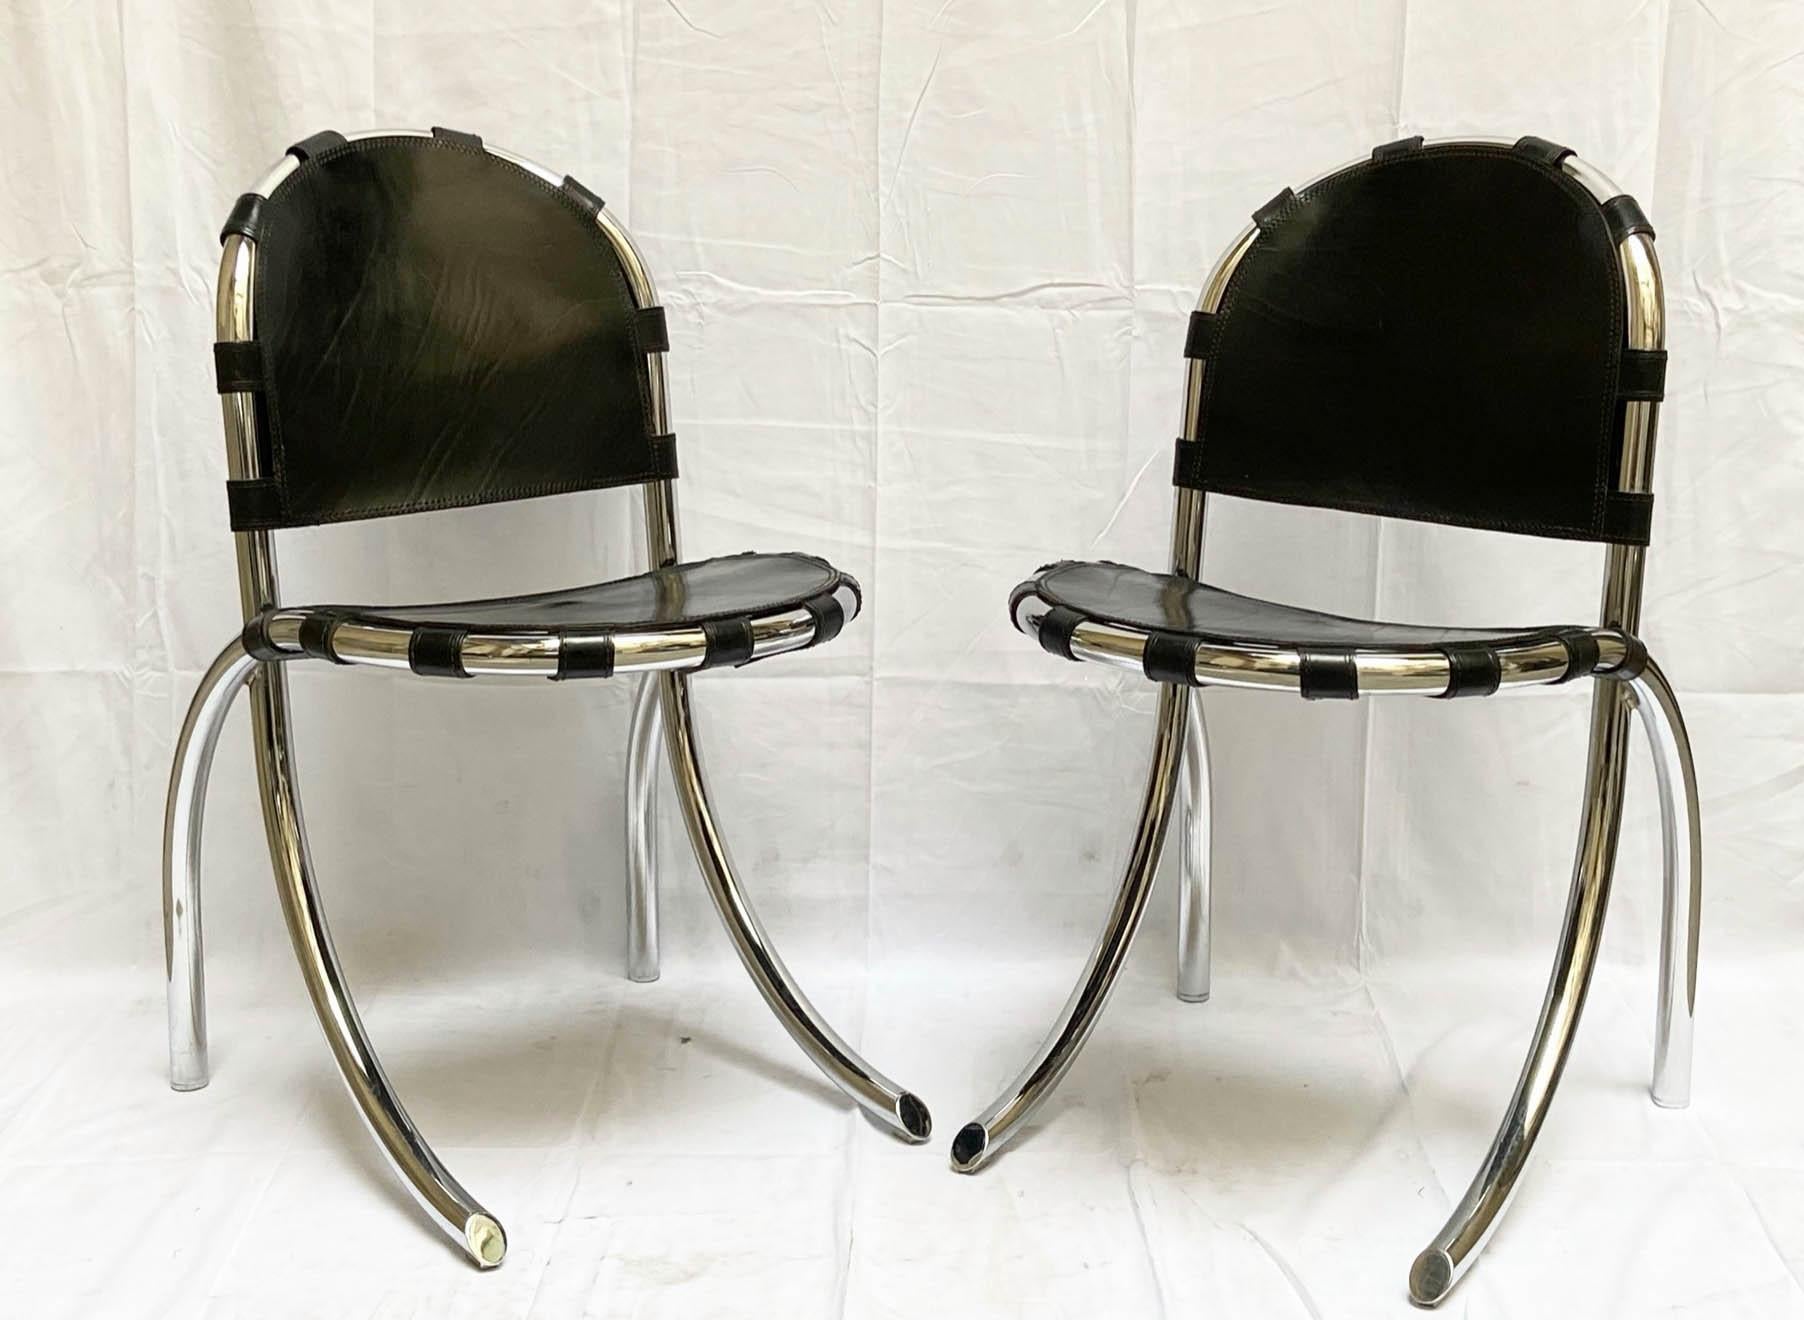 Italian Silver Metal Chairs Studio Tetrark Medusa 1960s Bazzani Made in Italy